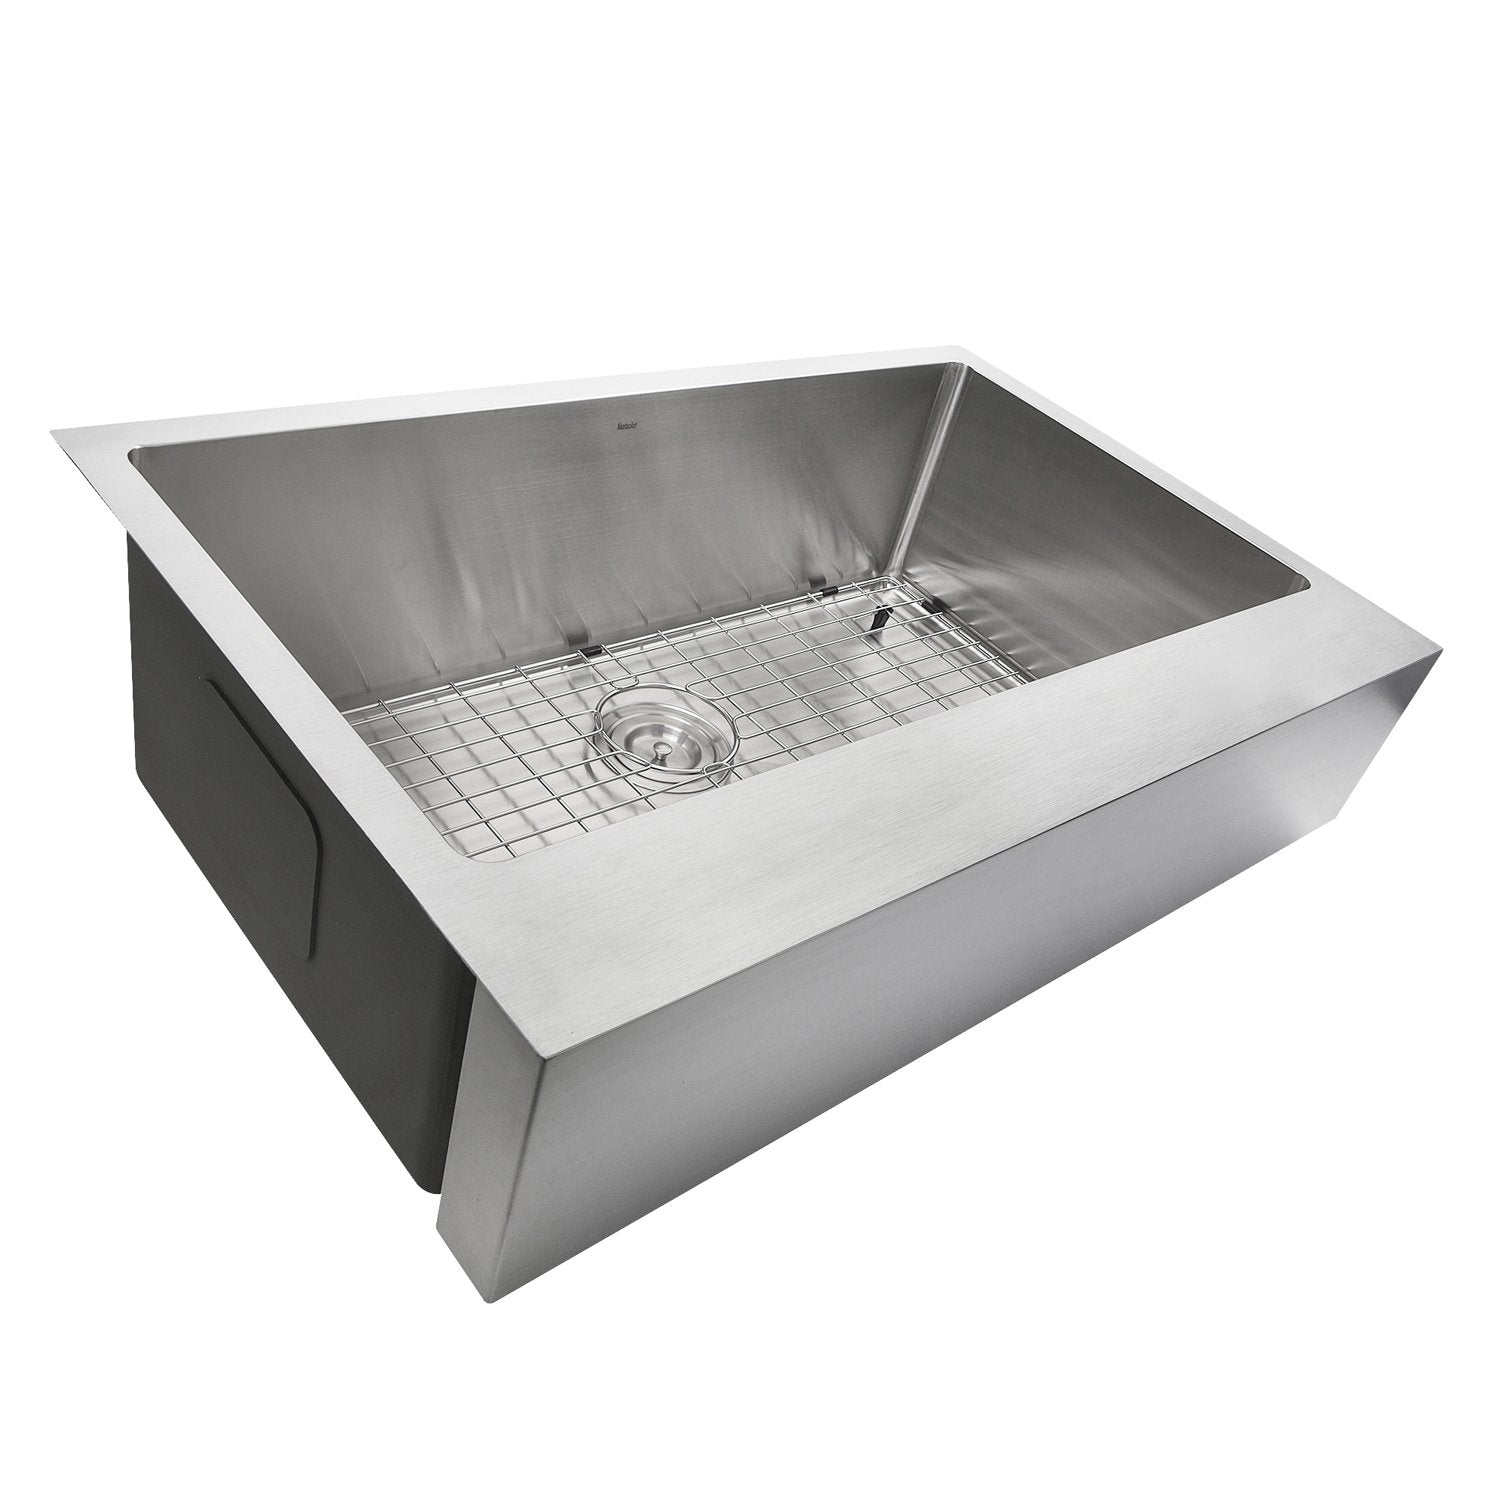 Nantucket Sinks EZApron33-9 RetroFit Single Bowl Undermount Stainless Steel Kitchen Sink with 9" Apron Front